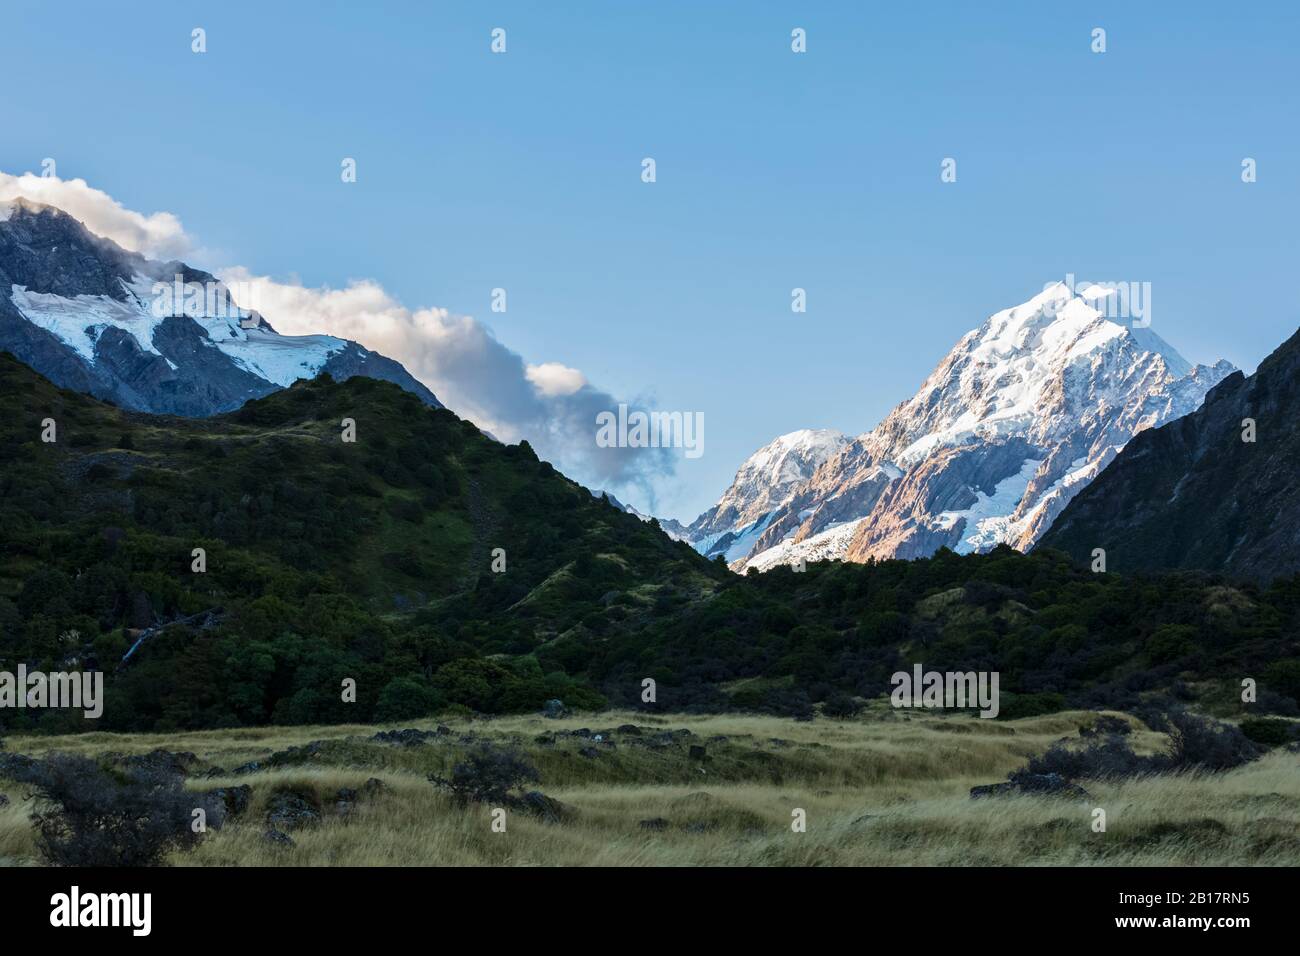 New Zealand, Oceania, South Island, Canterbury, Ben Ohau, Southern Alps (New Zealand Alps), Mount Cook National Park, Aoraki / Mount Cook, Mountain landscape Stock Photo